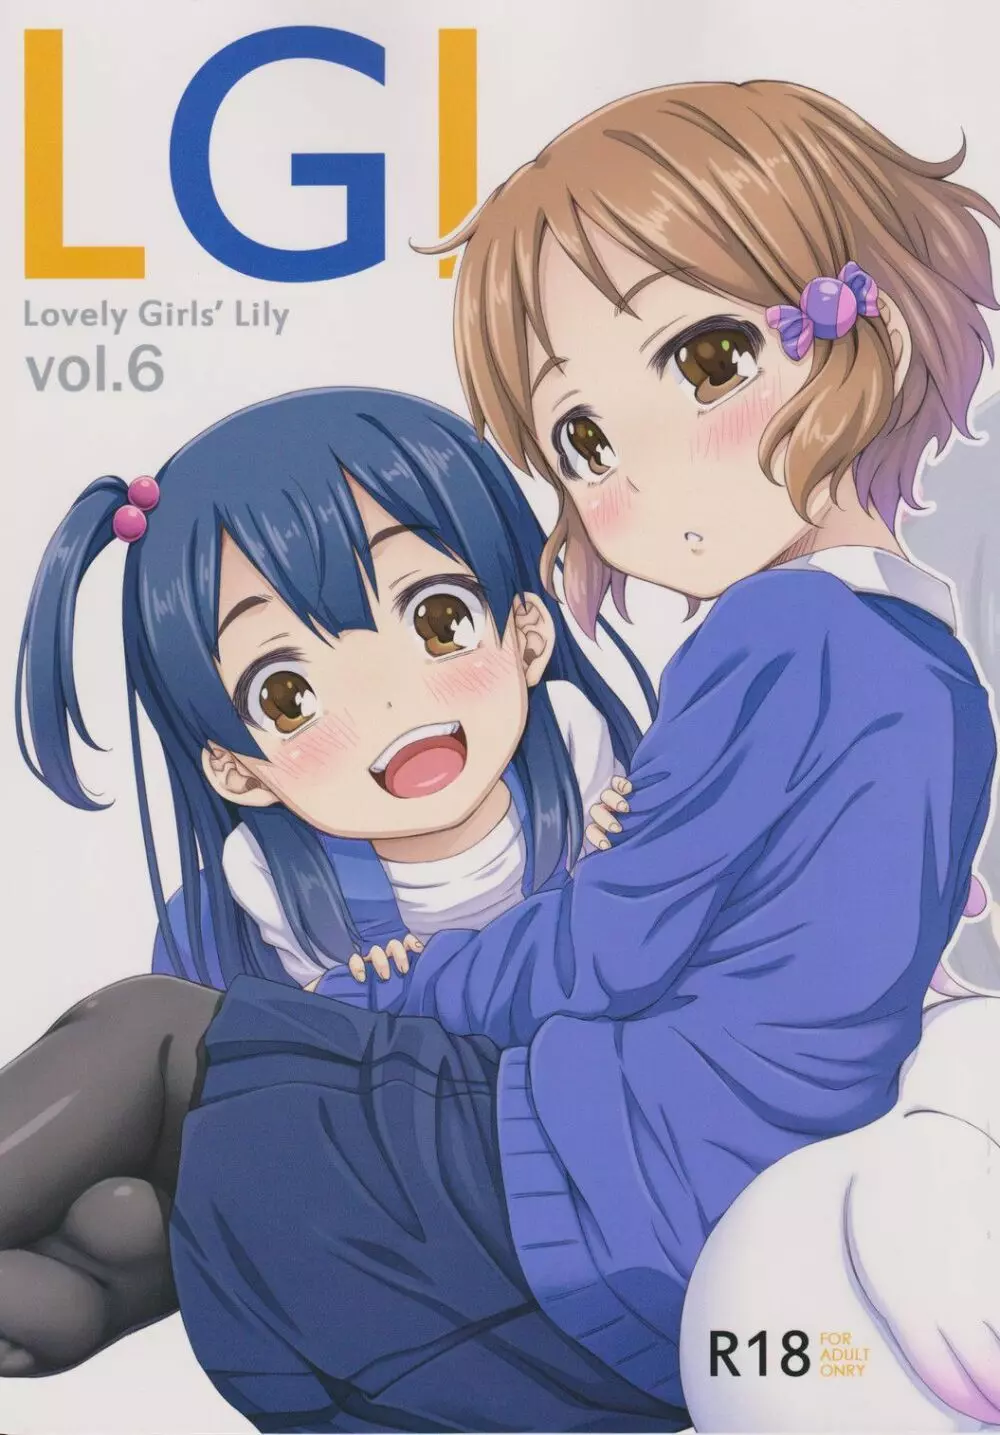 Lovely Girls’ Lily vol.6